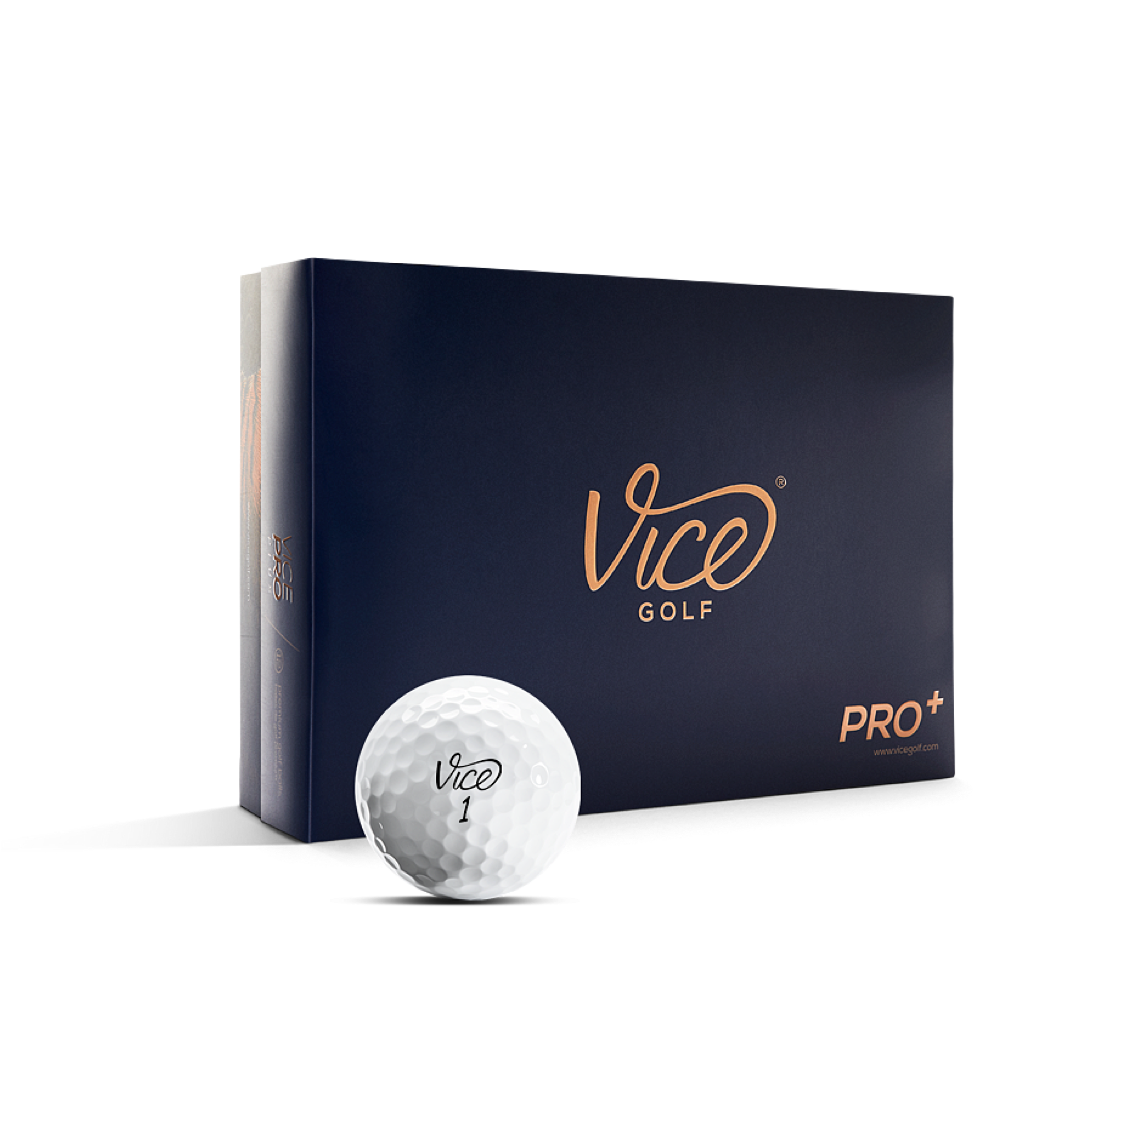 Shapland logo golf balls by Vice Golf